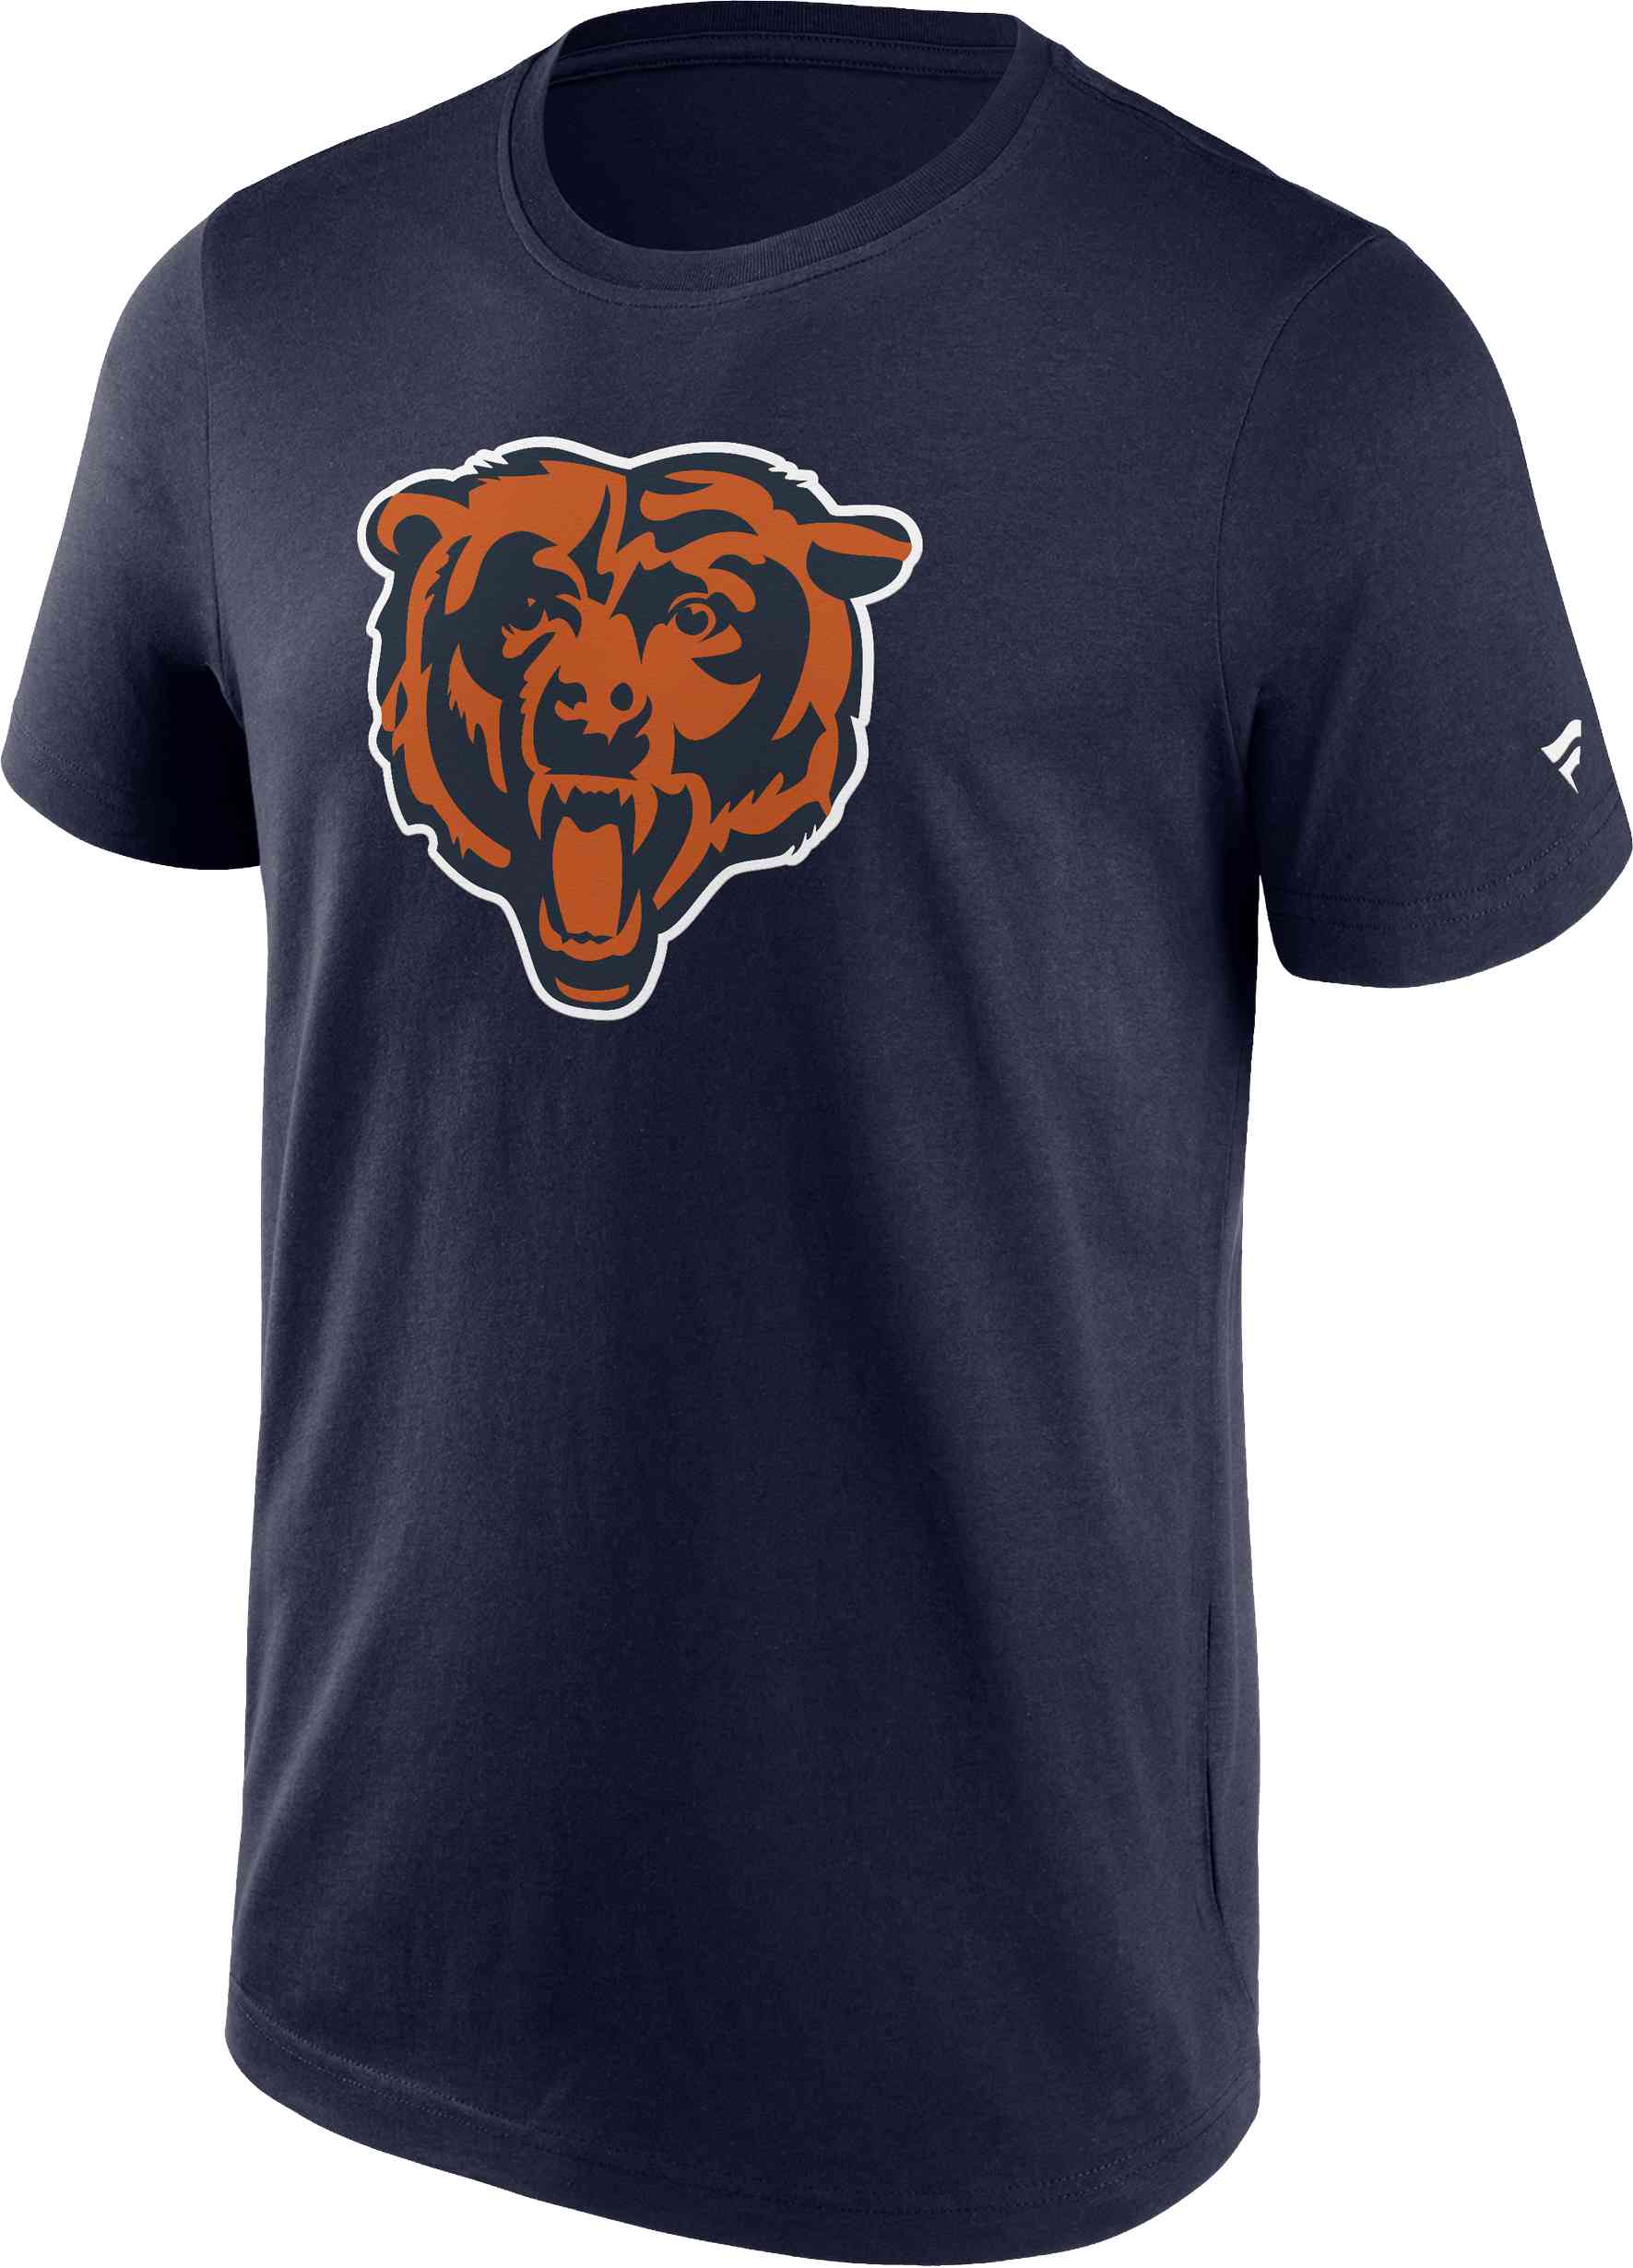 Fanatics - NFL Chicago Bears Primary Logo Graphic T-Shirt